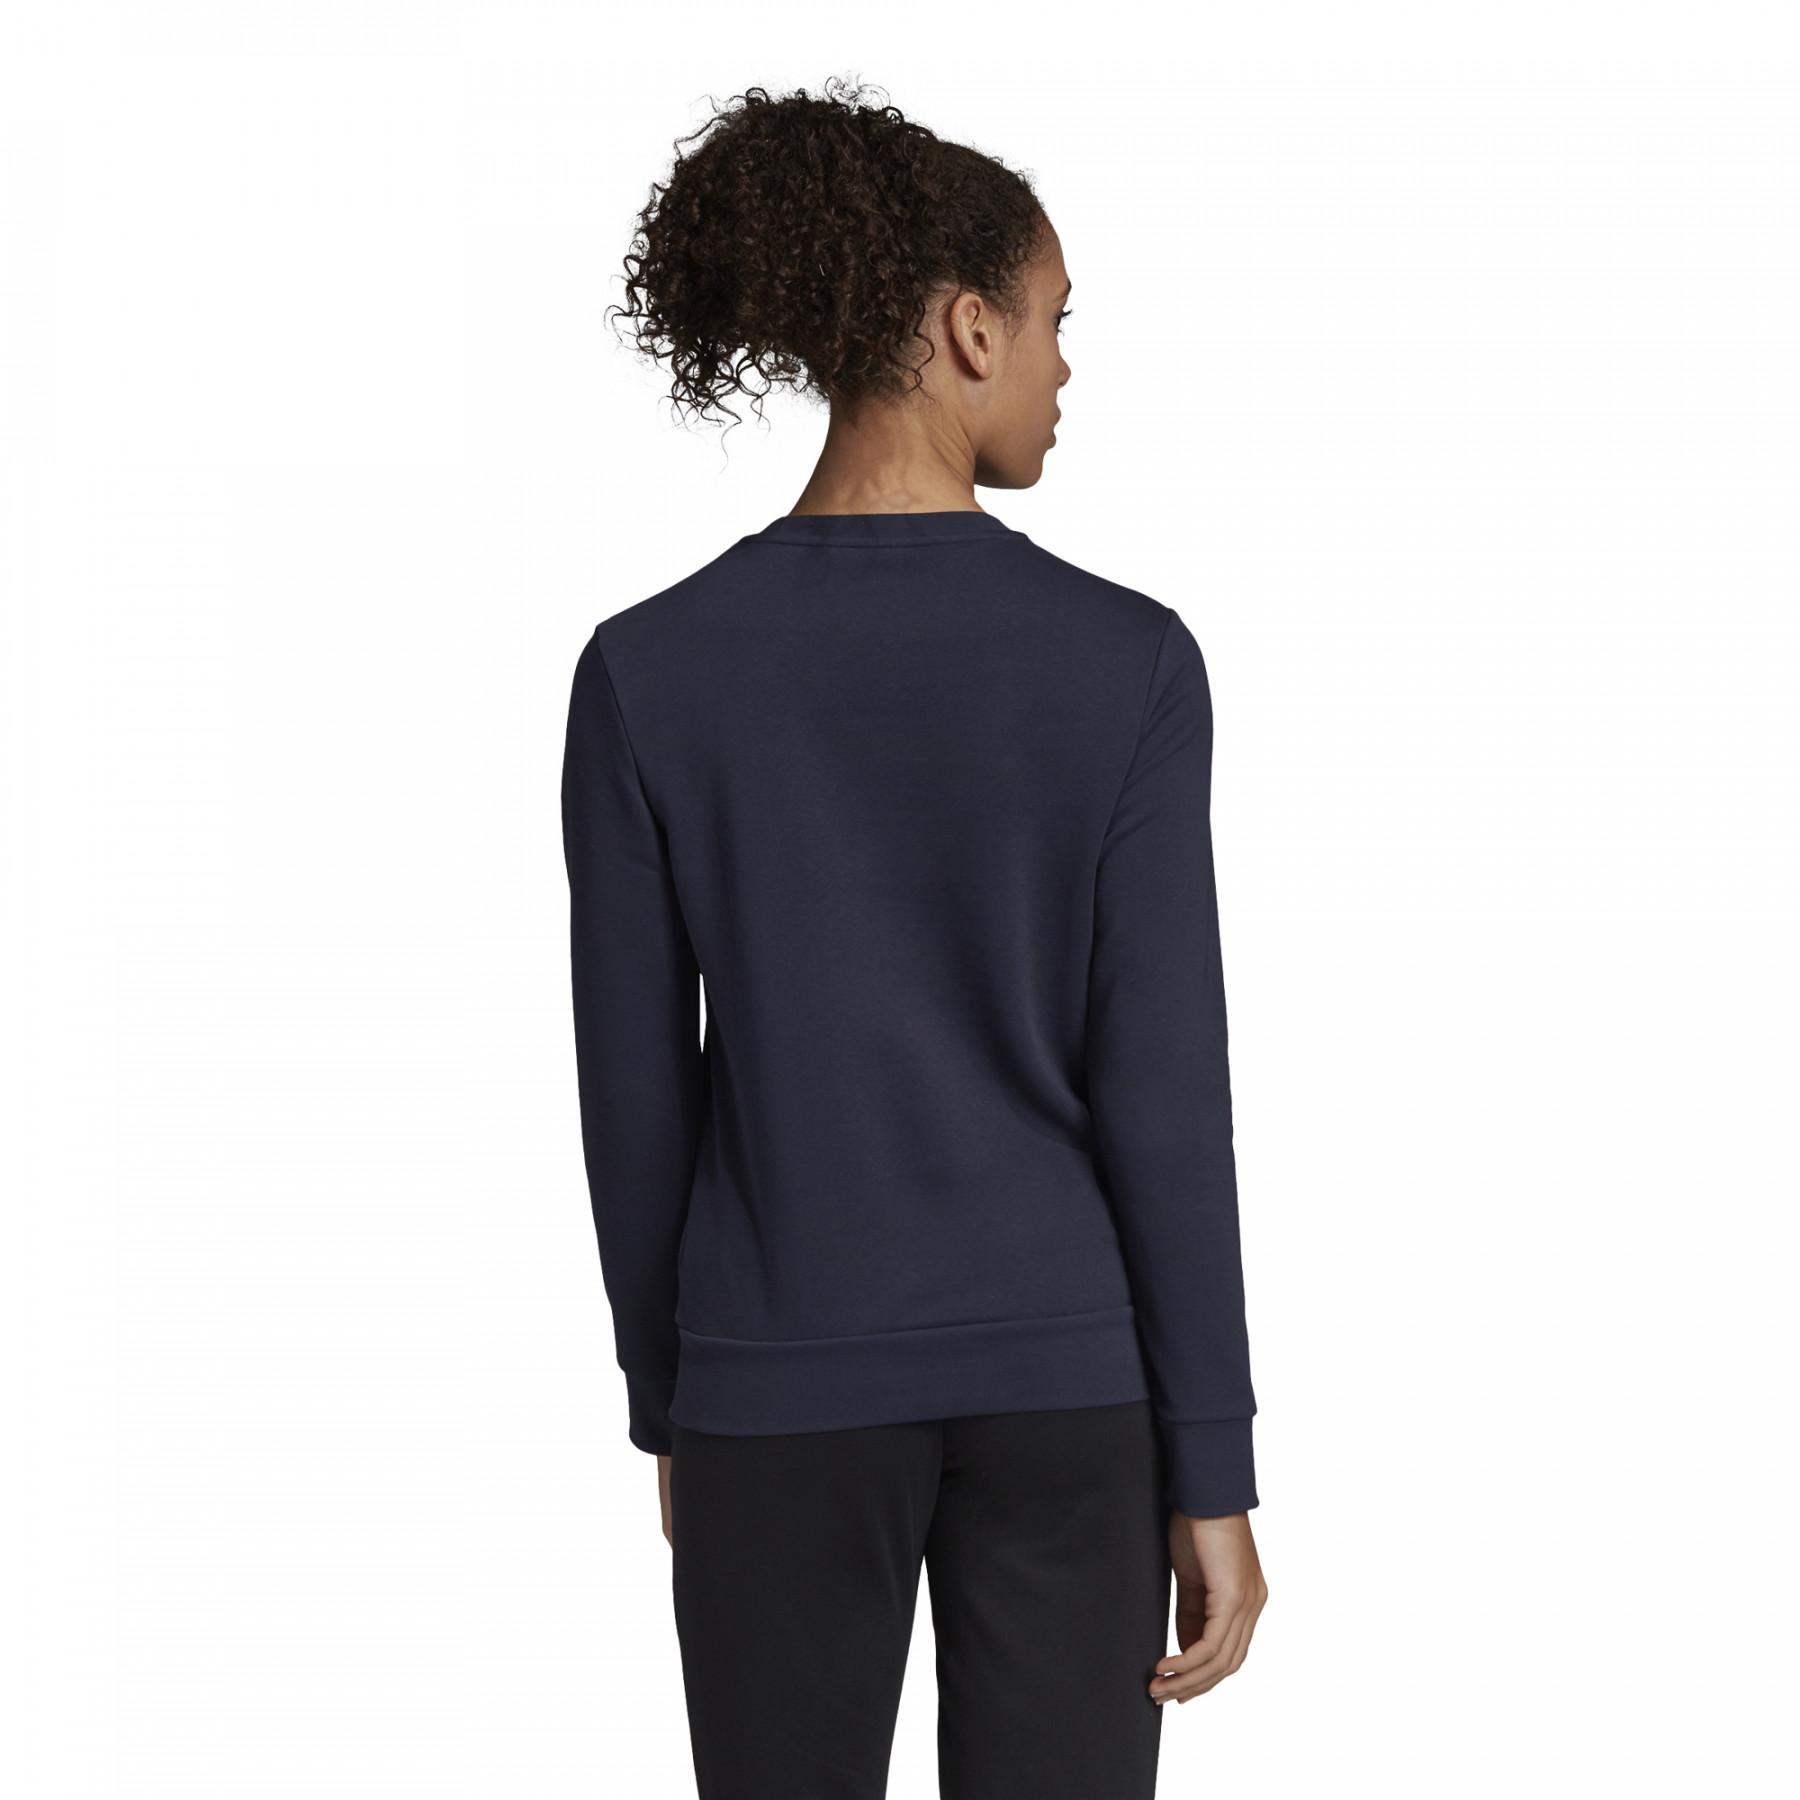 Women's sweatshirt adidas Essentials Linear